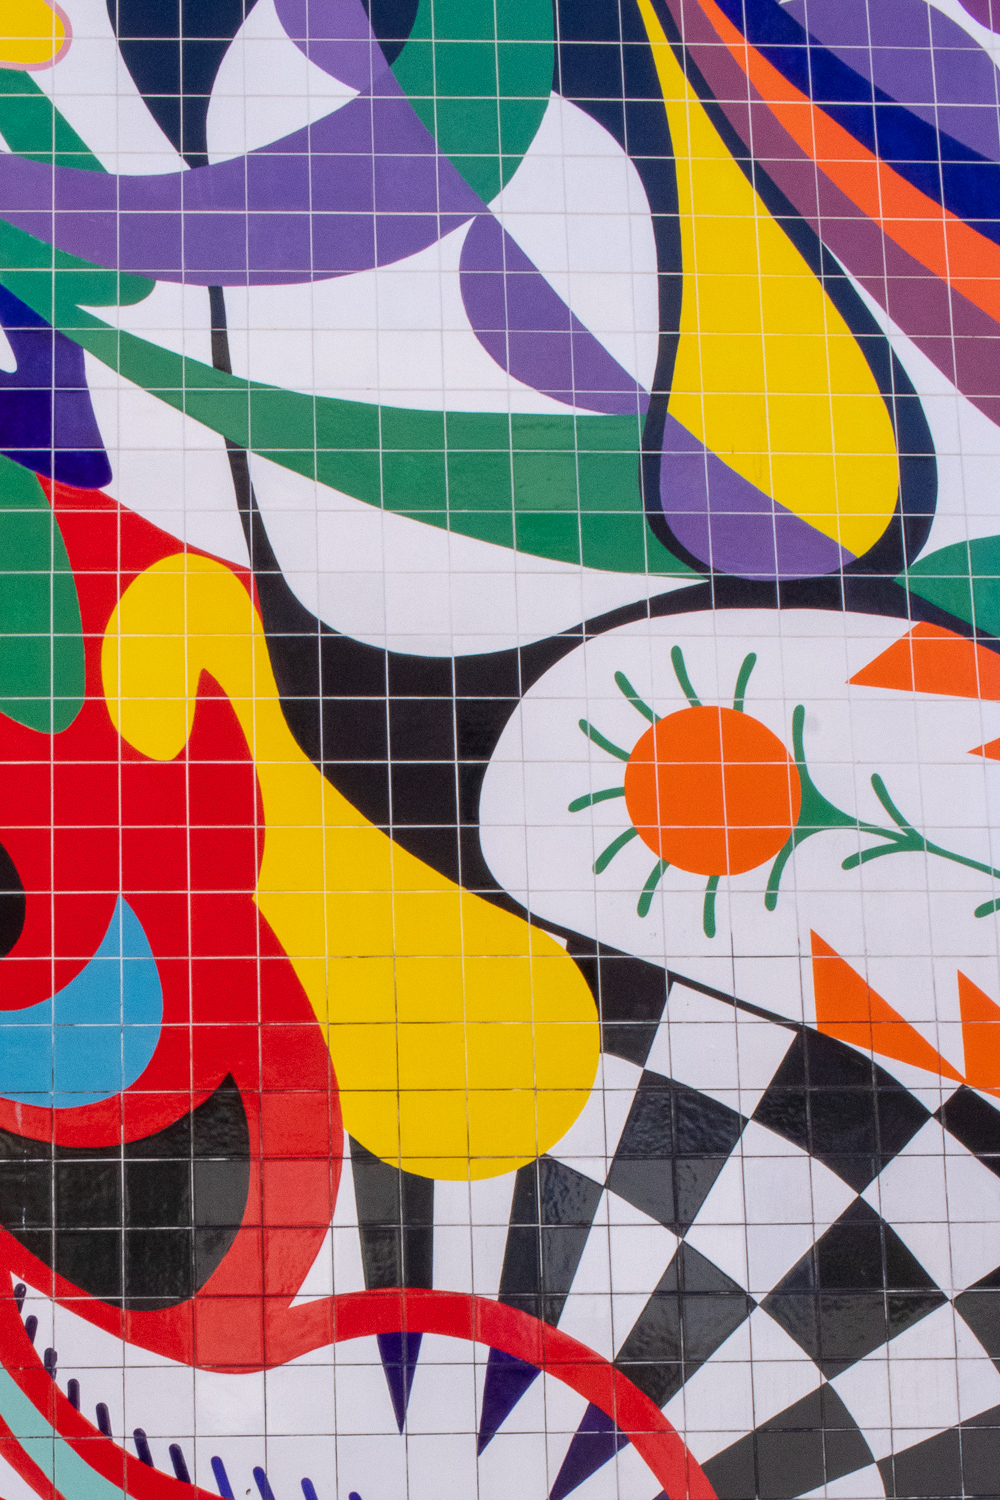 Porto azulejos tiles - The Steak n Shake mural by Joana Vasconcelos